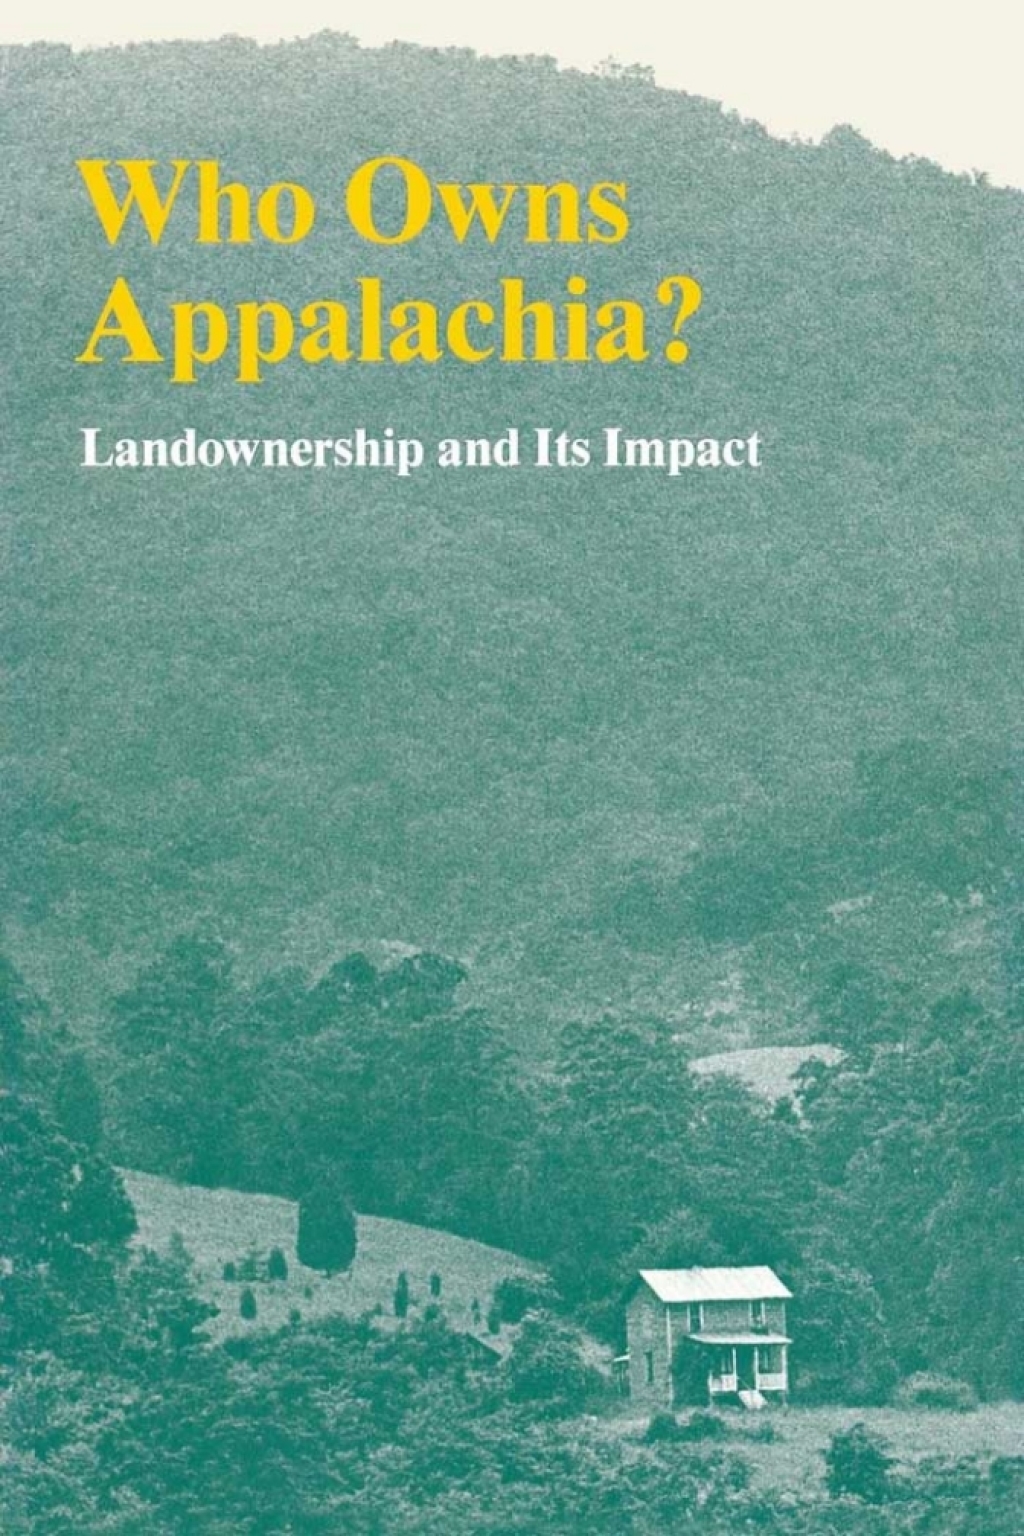 Who Owns Appalachia? (eBook) - Appalachian Land Ownership Task Force